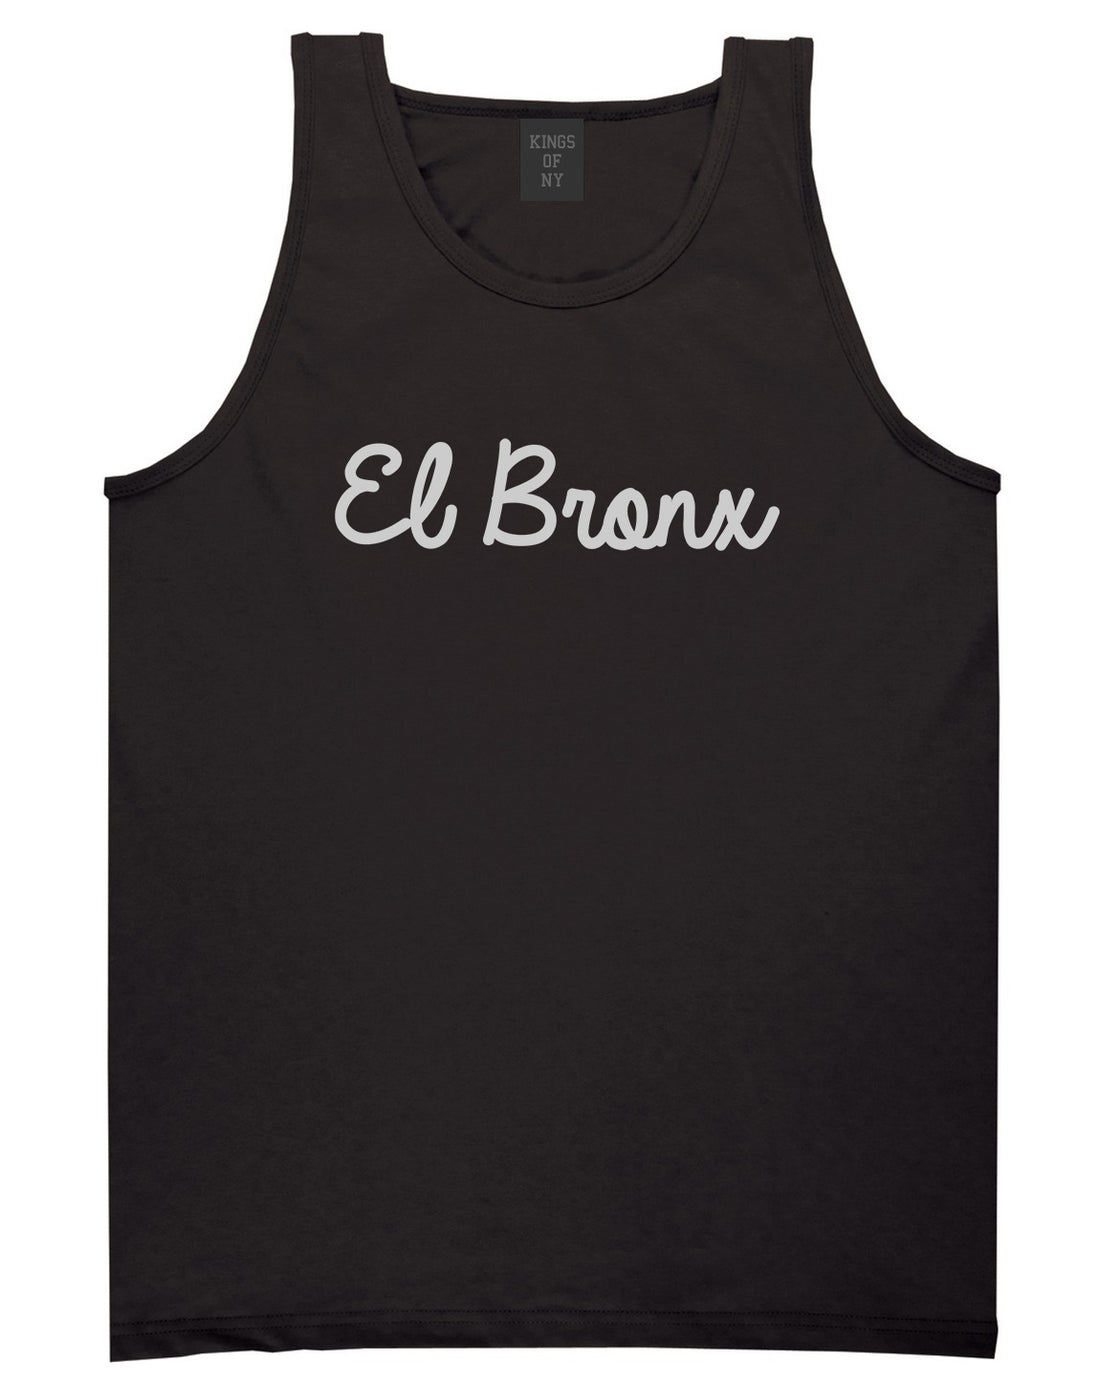 El Bronx Spanish Script Mens Tank Top Shirt Black by Kings Of NY